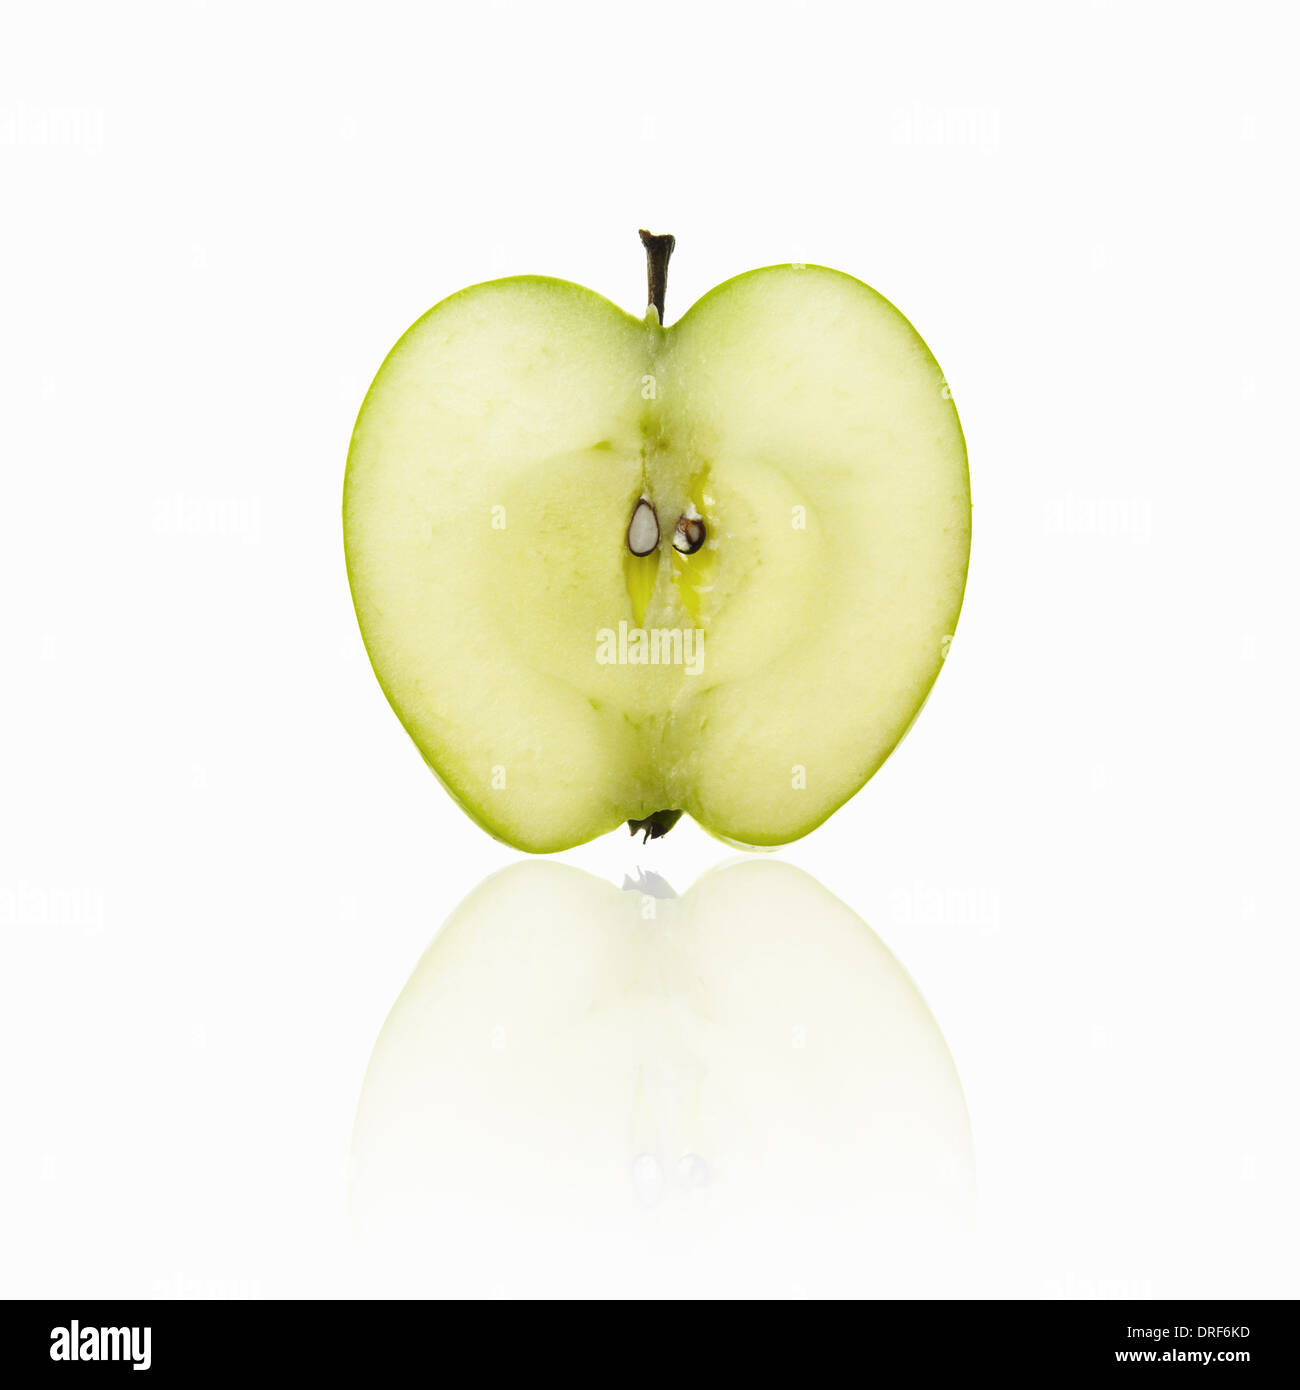 Sezione trasversale di una mela tagliata a metà Foto Stock